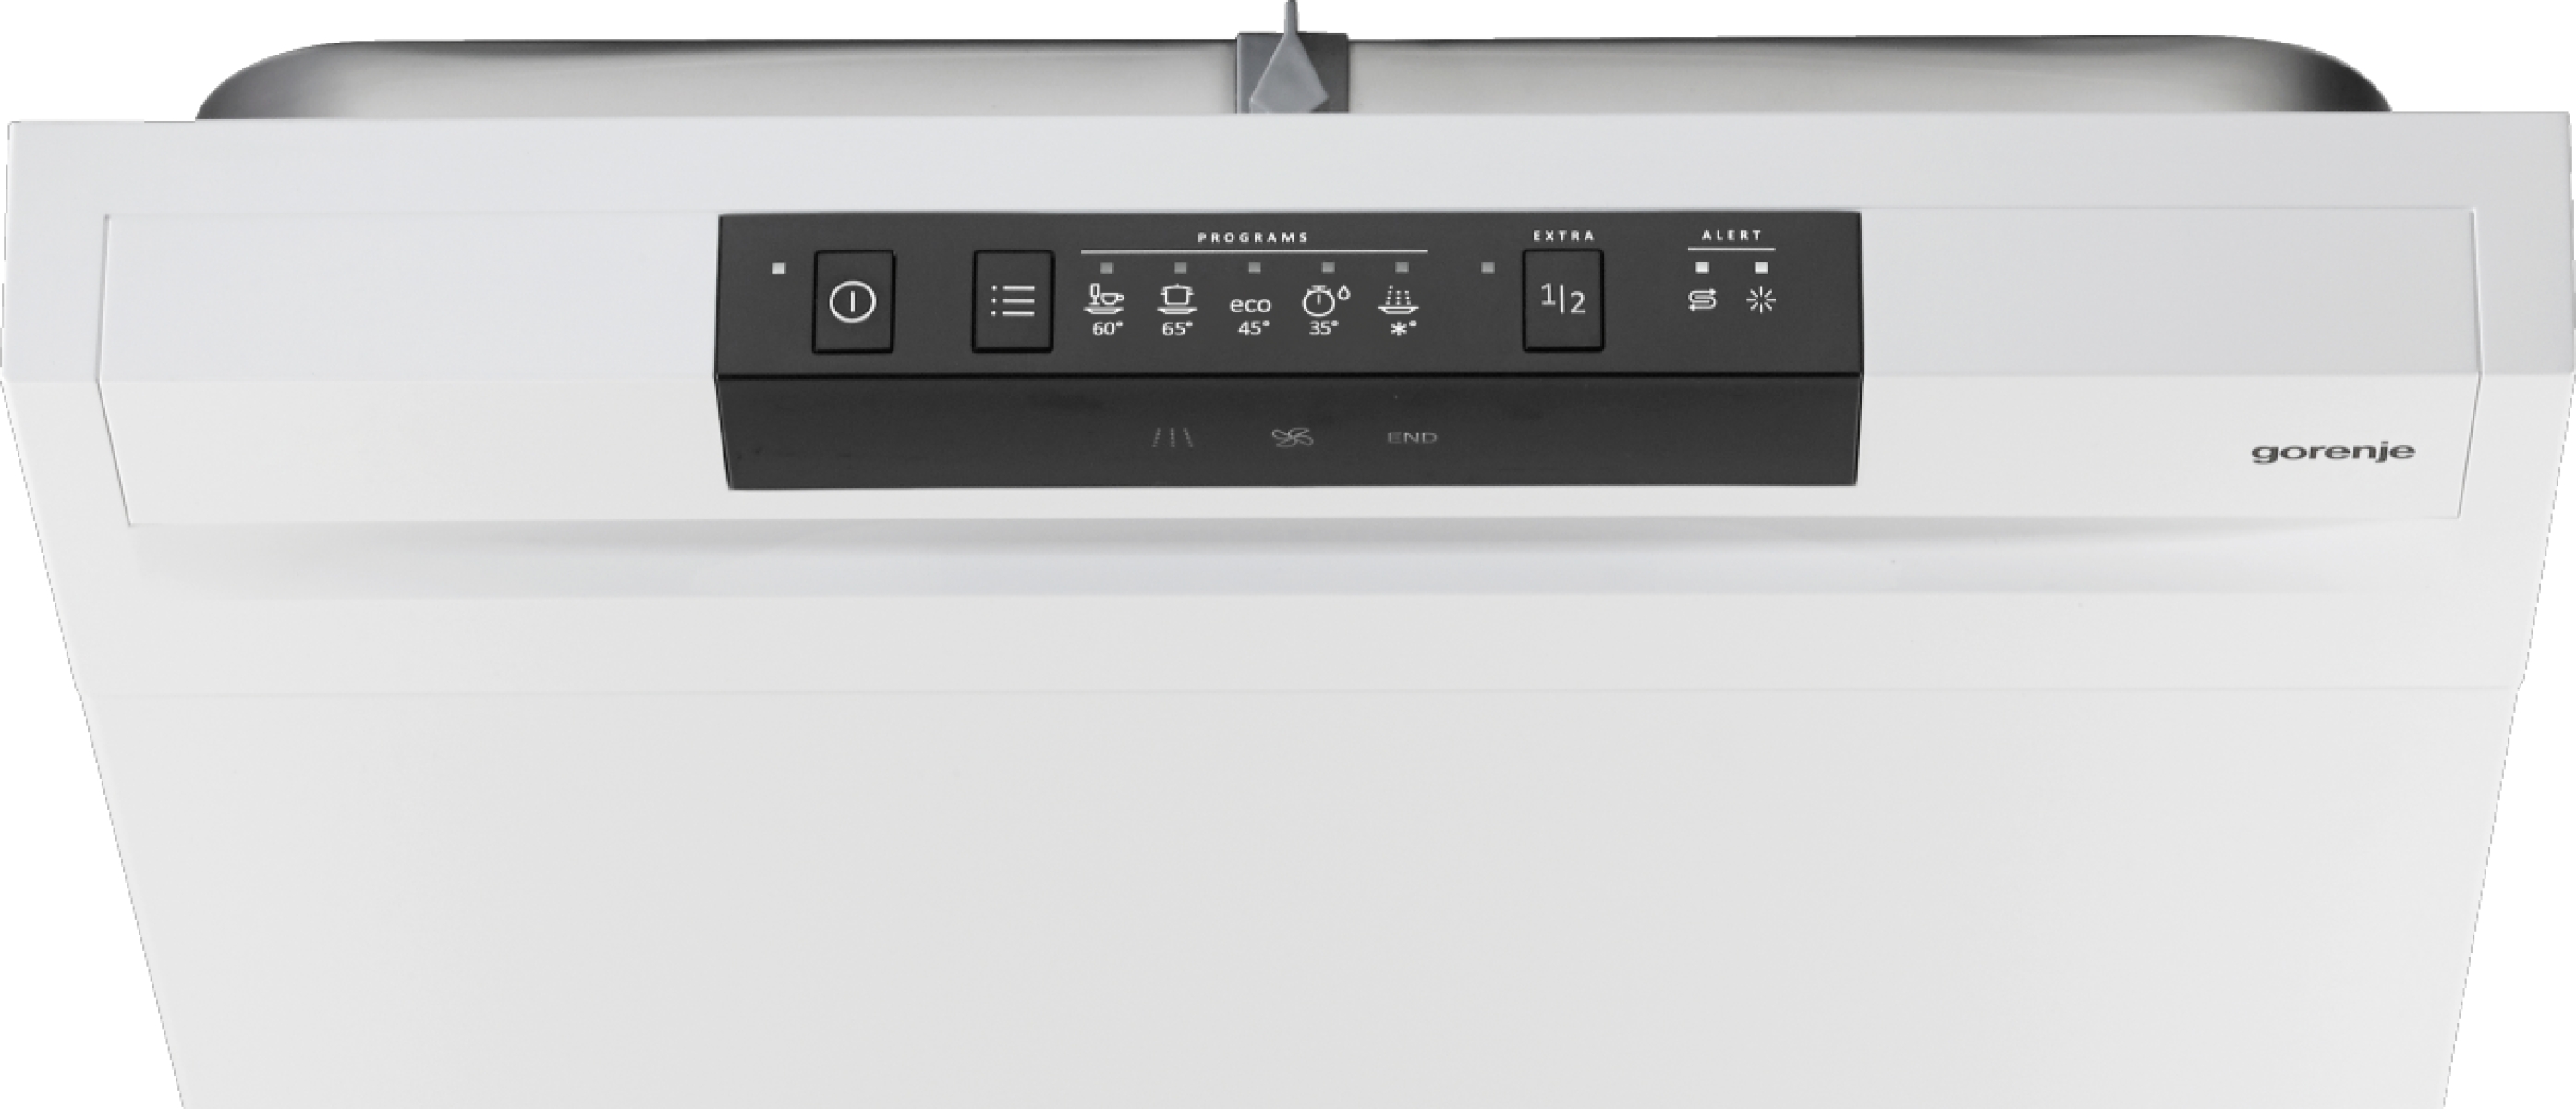 Посудомоечная машина Gorenje GS520E15W характеристики - фотография 7